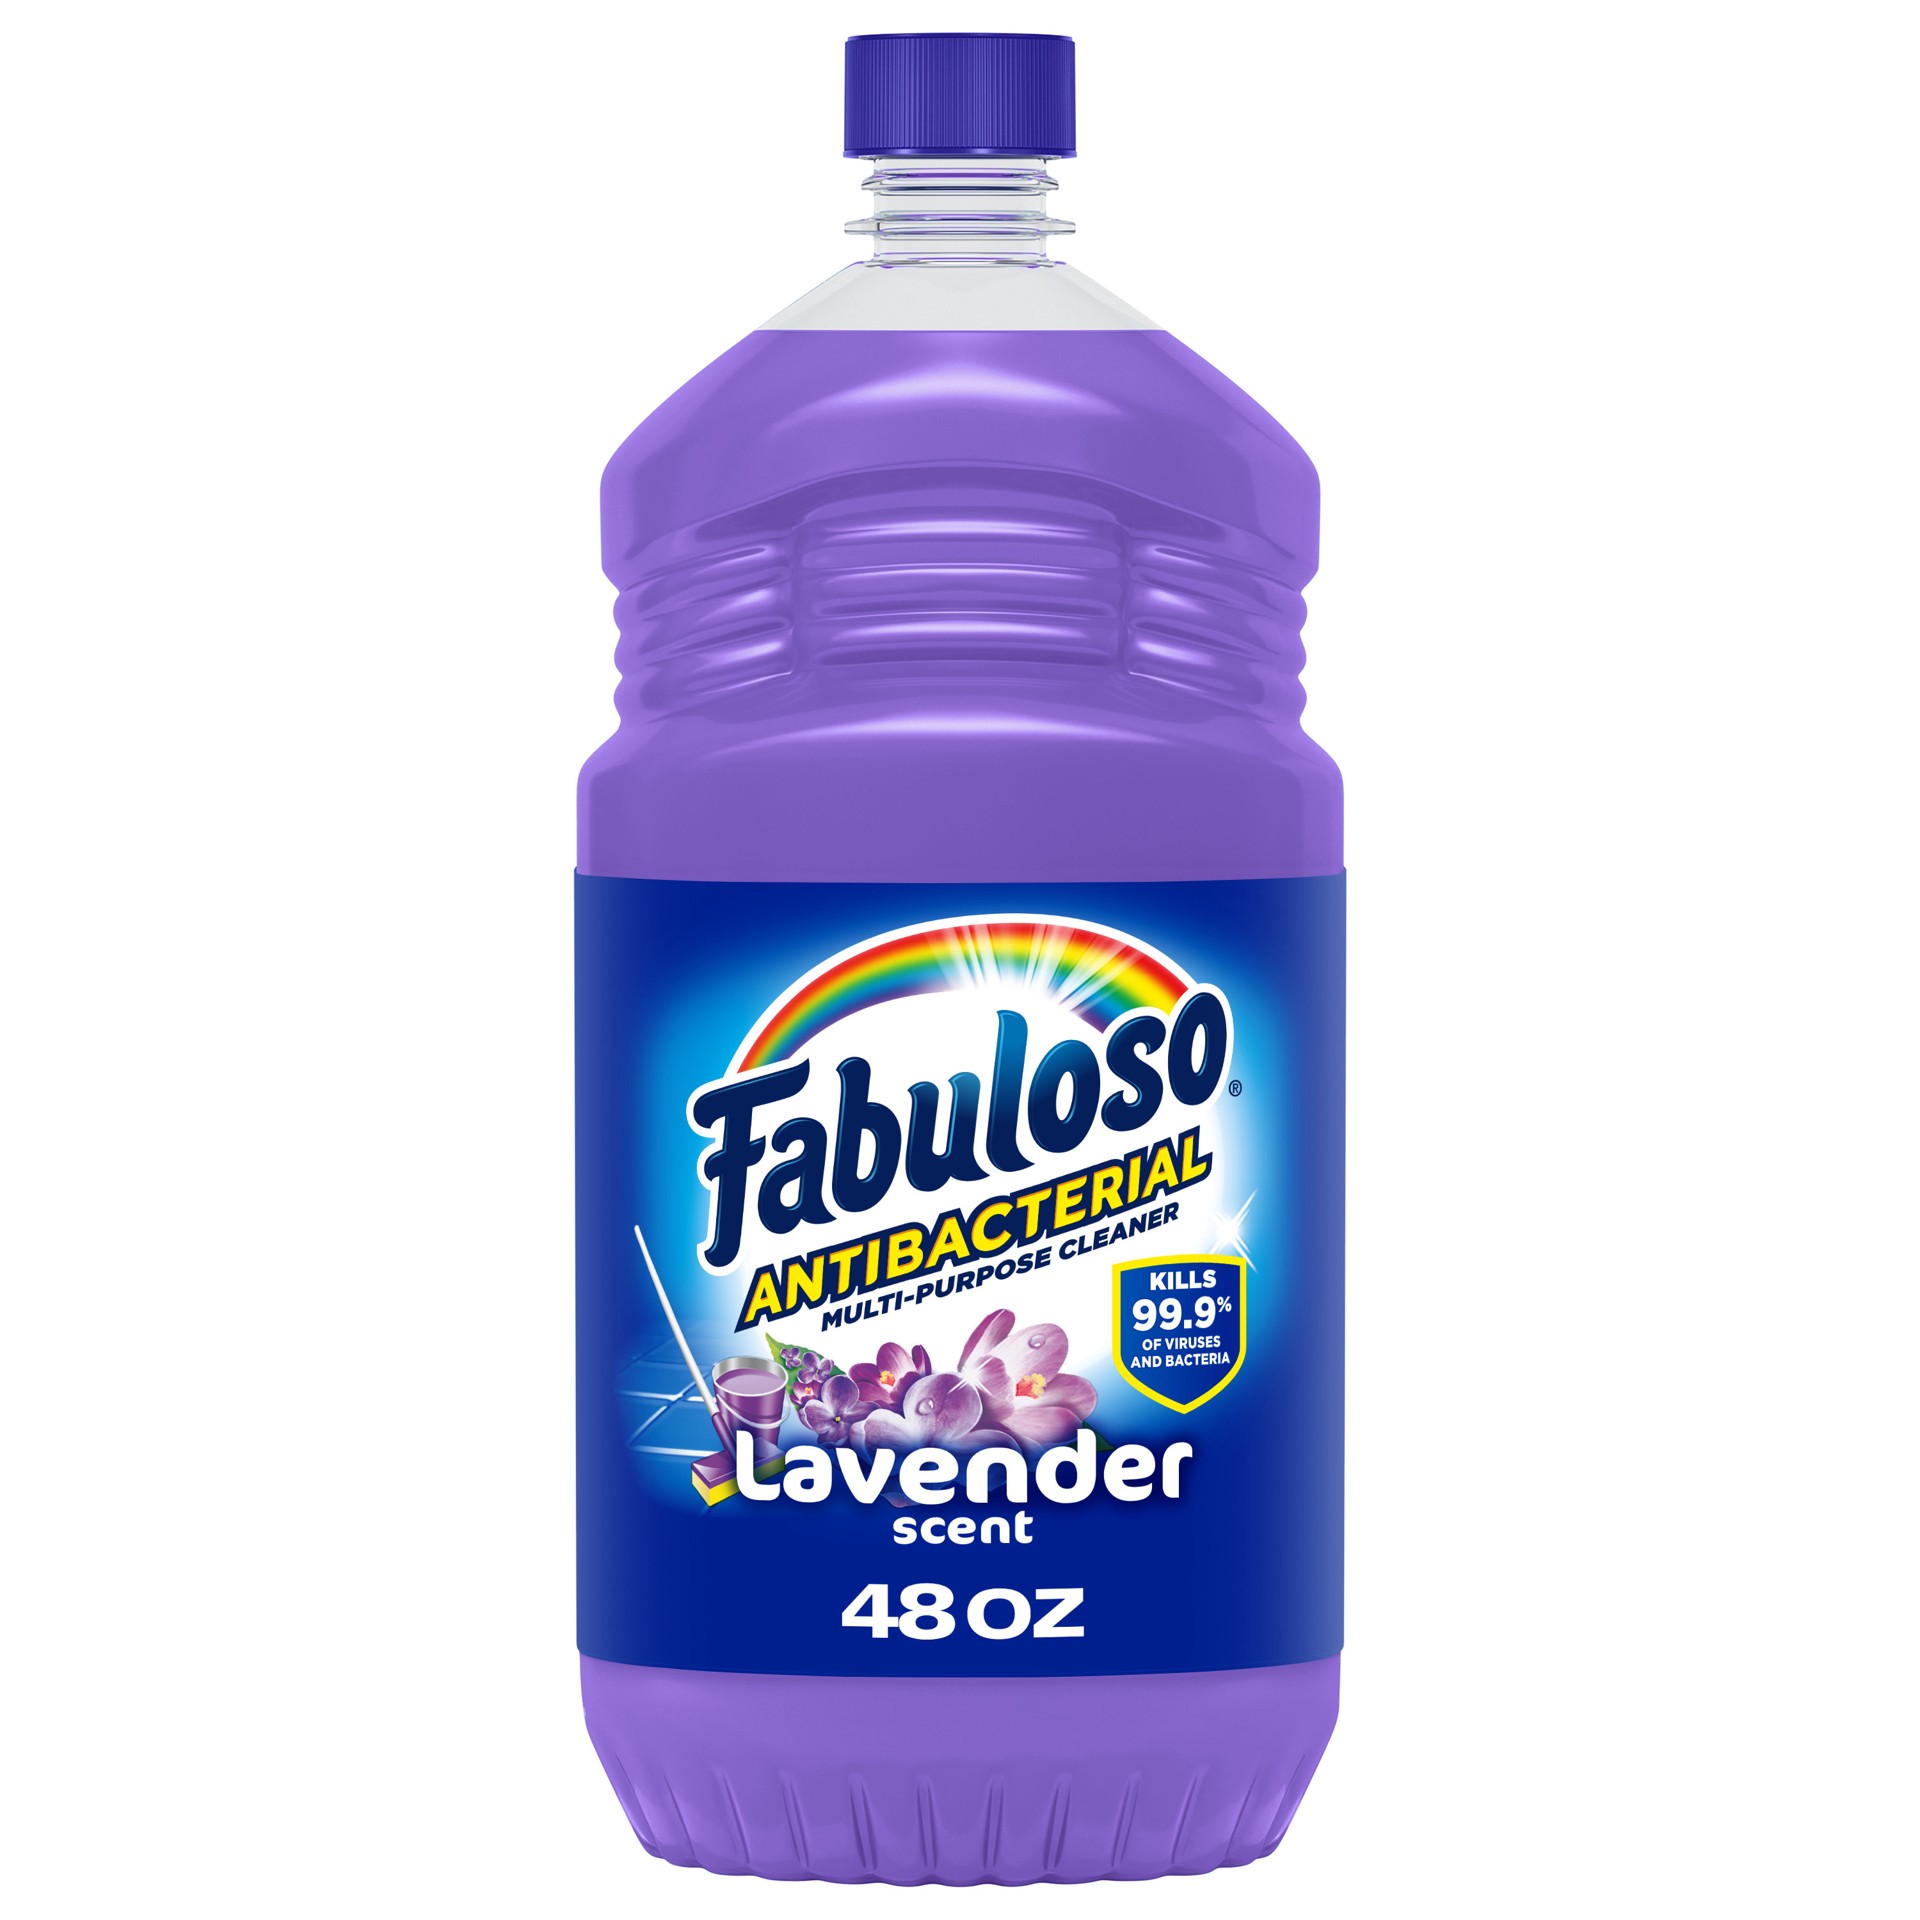 slide 1 of 65, Fabuloso Antibacterial Lavender, 48 fl oz
, 48 fl oz